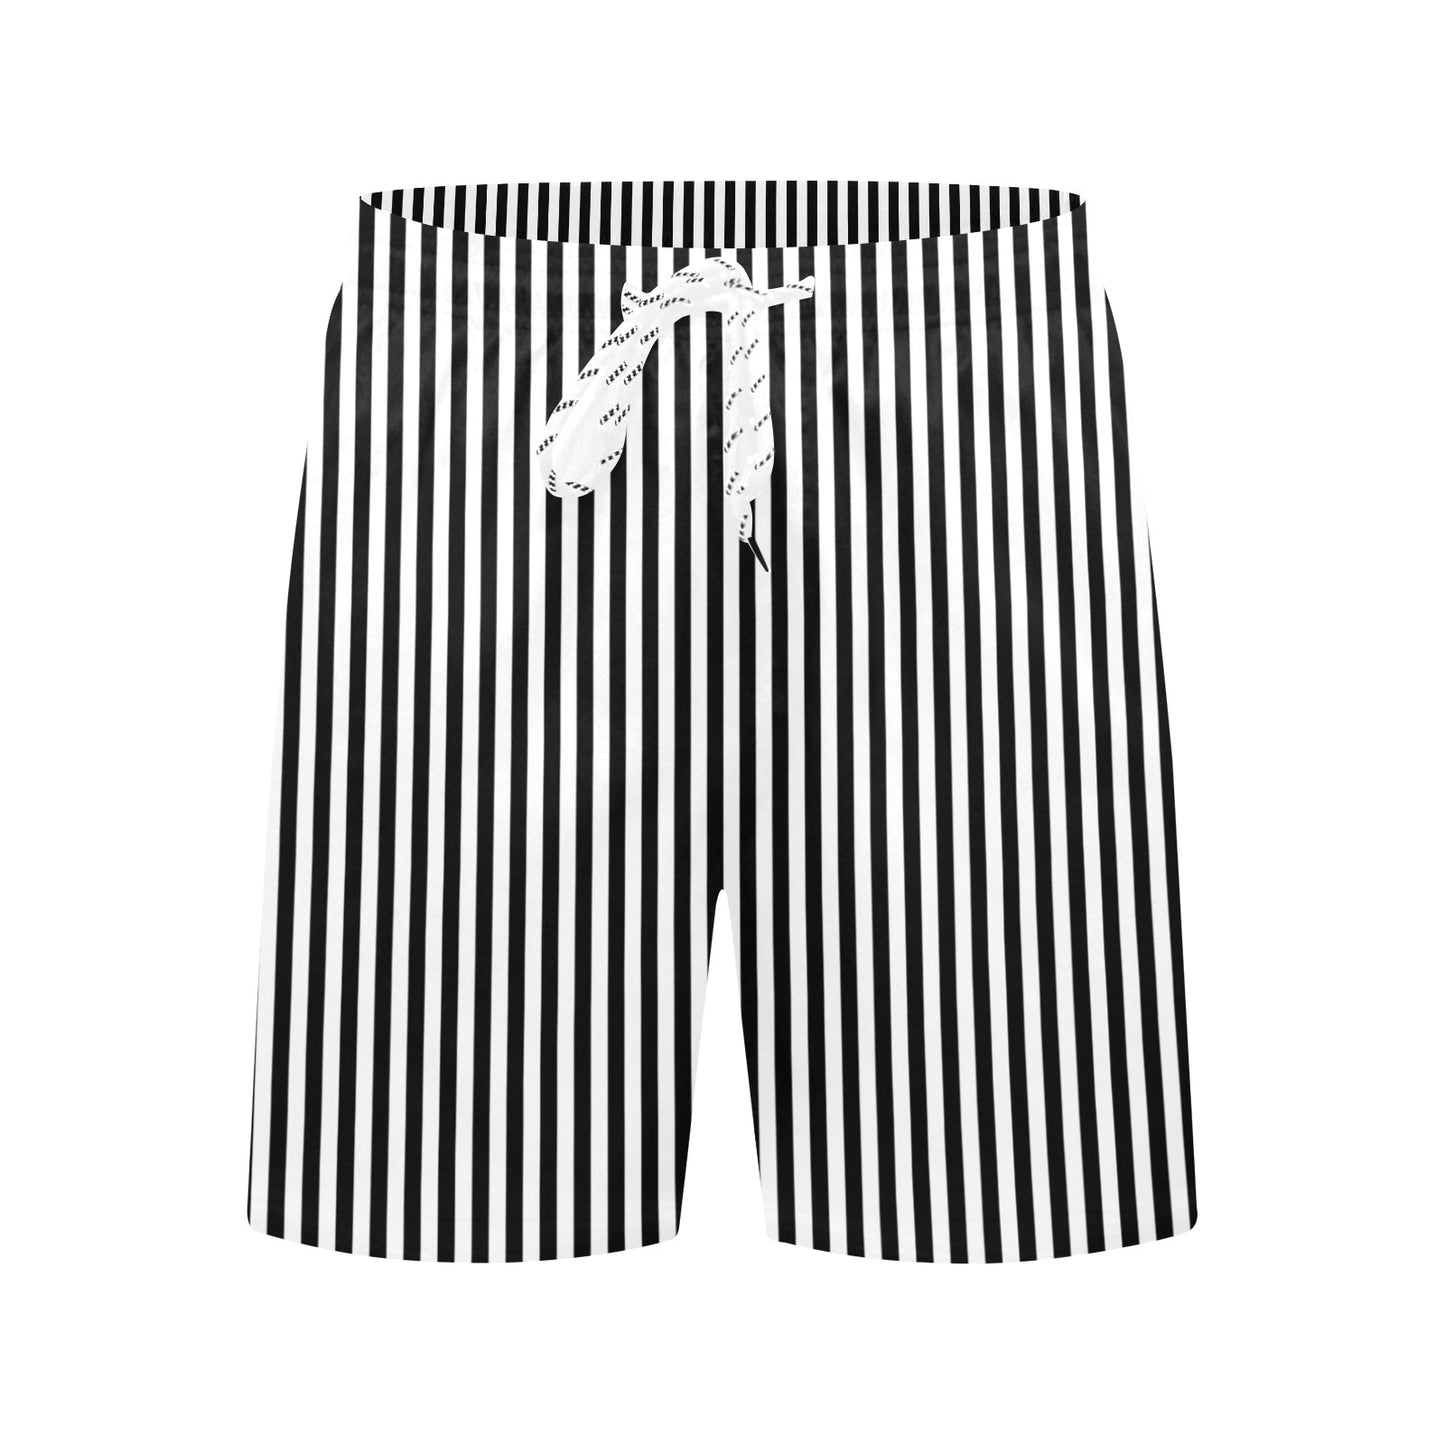 Black White Striped Men Swim Trunks, Mid Length Shorts Beach Pockets Mesh Lining Drawstring Male Casual Bathing Suit Plus Size Swimwear